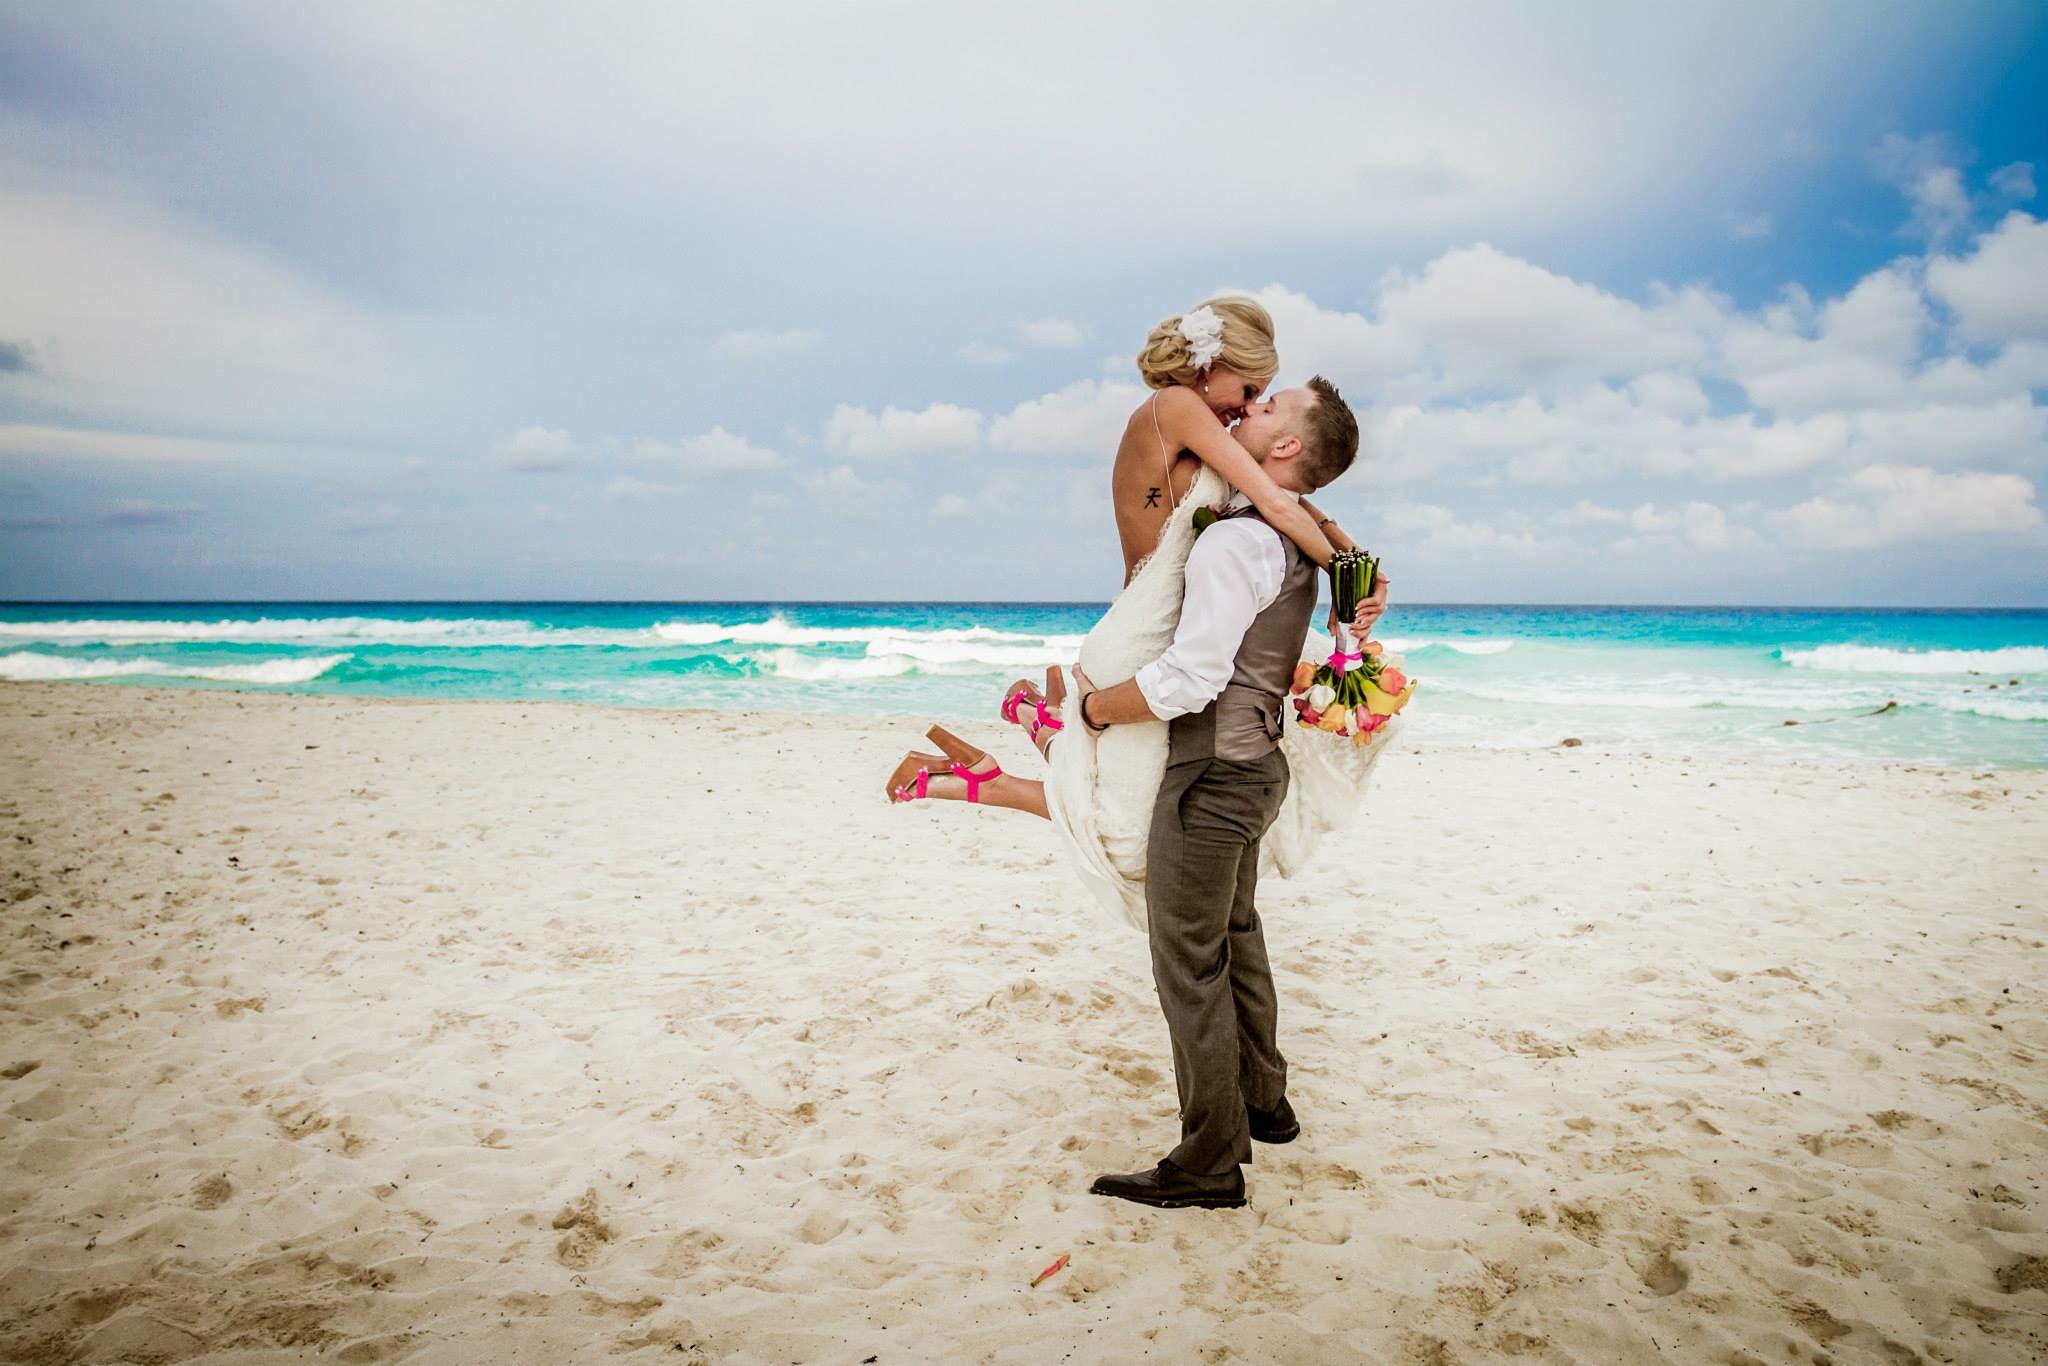 krysten-reed-cancun-beach-wedding-23.JPG